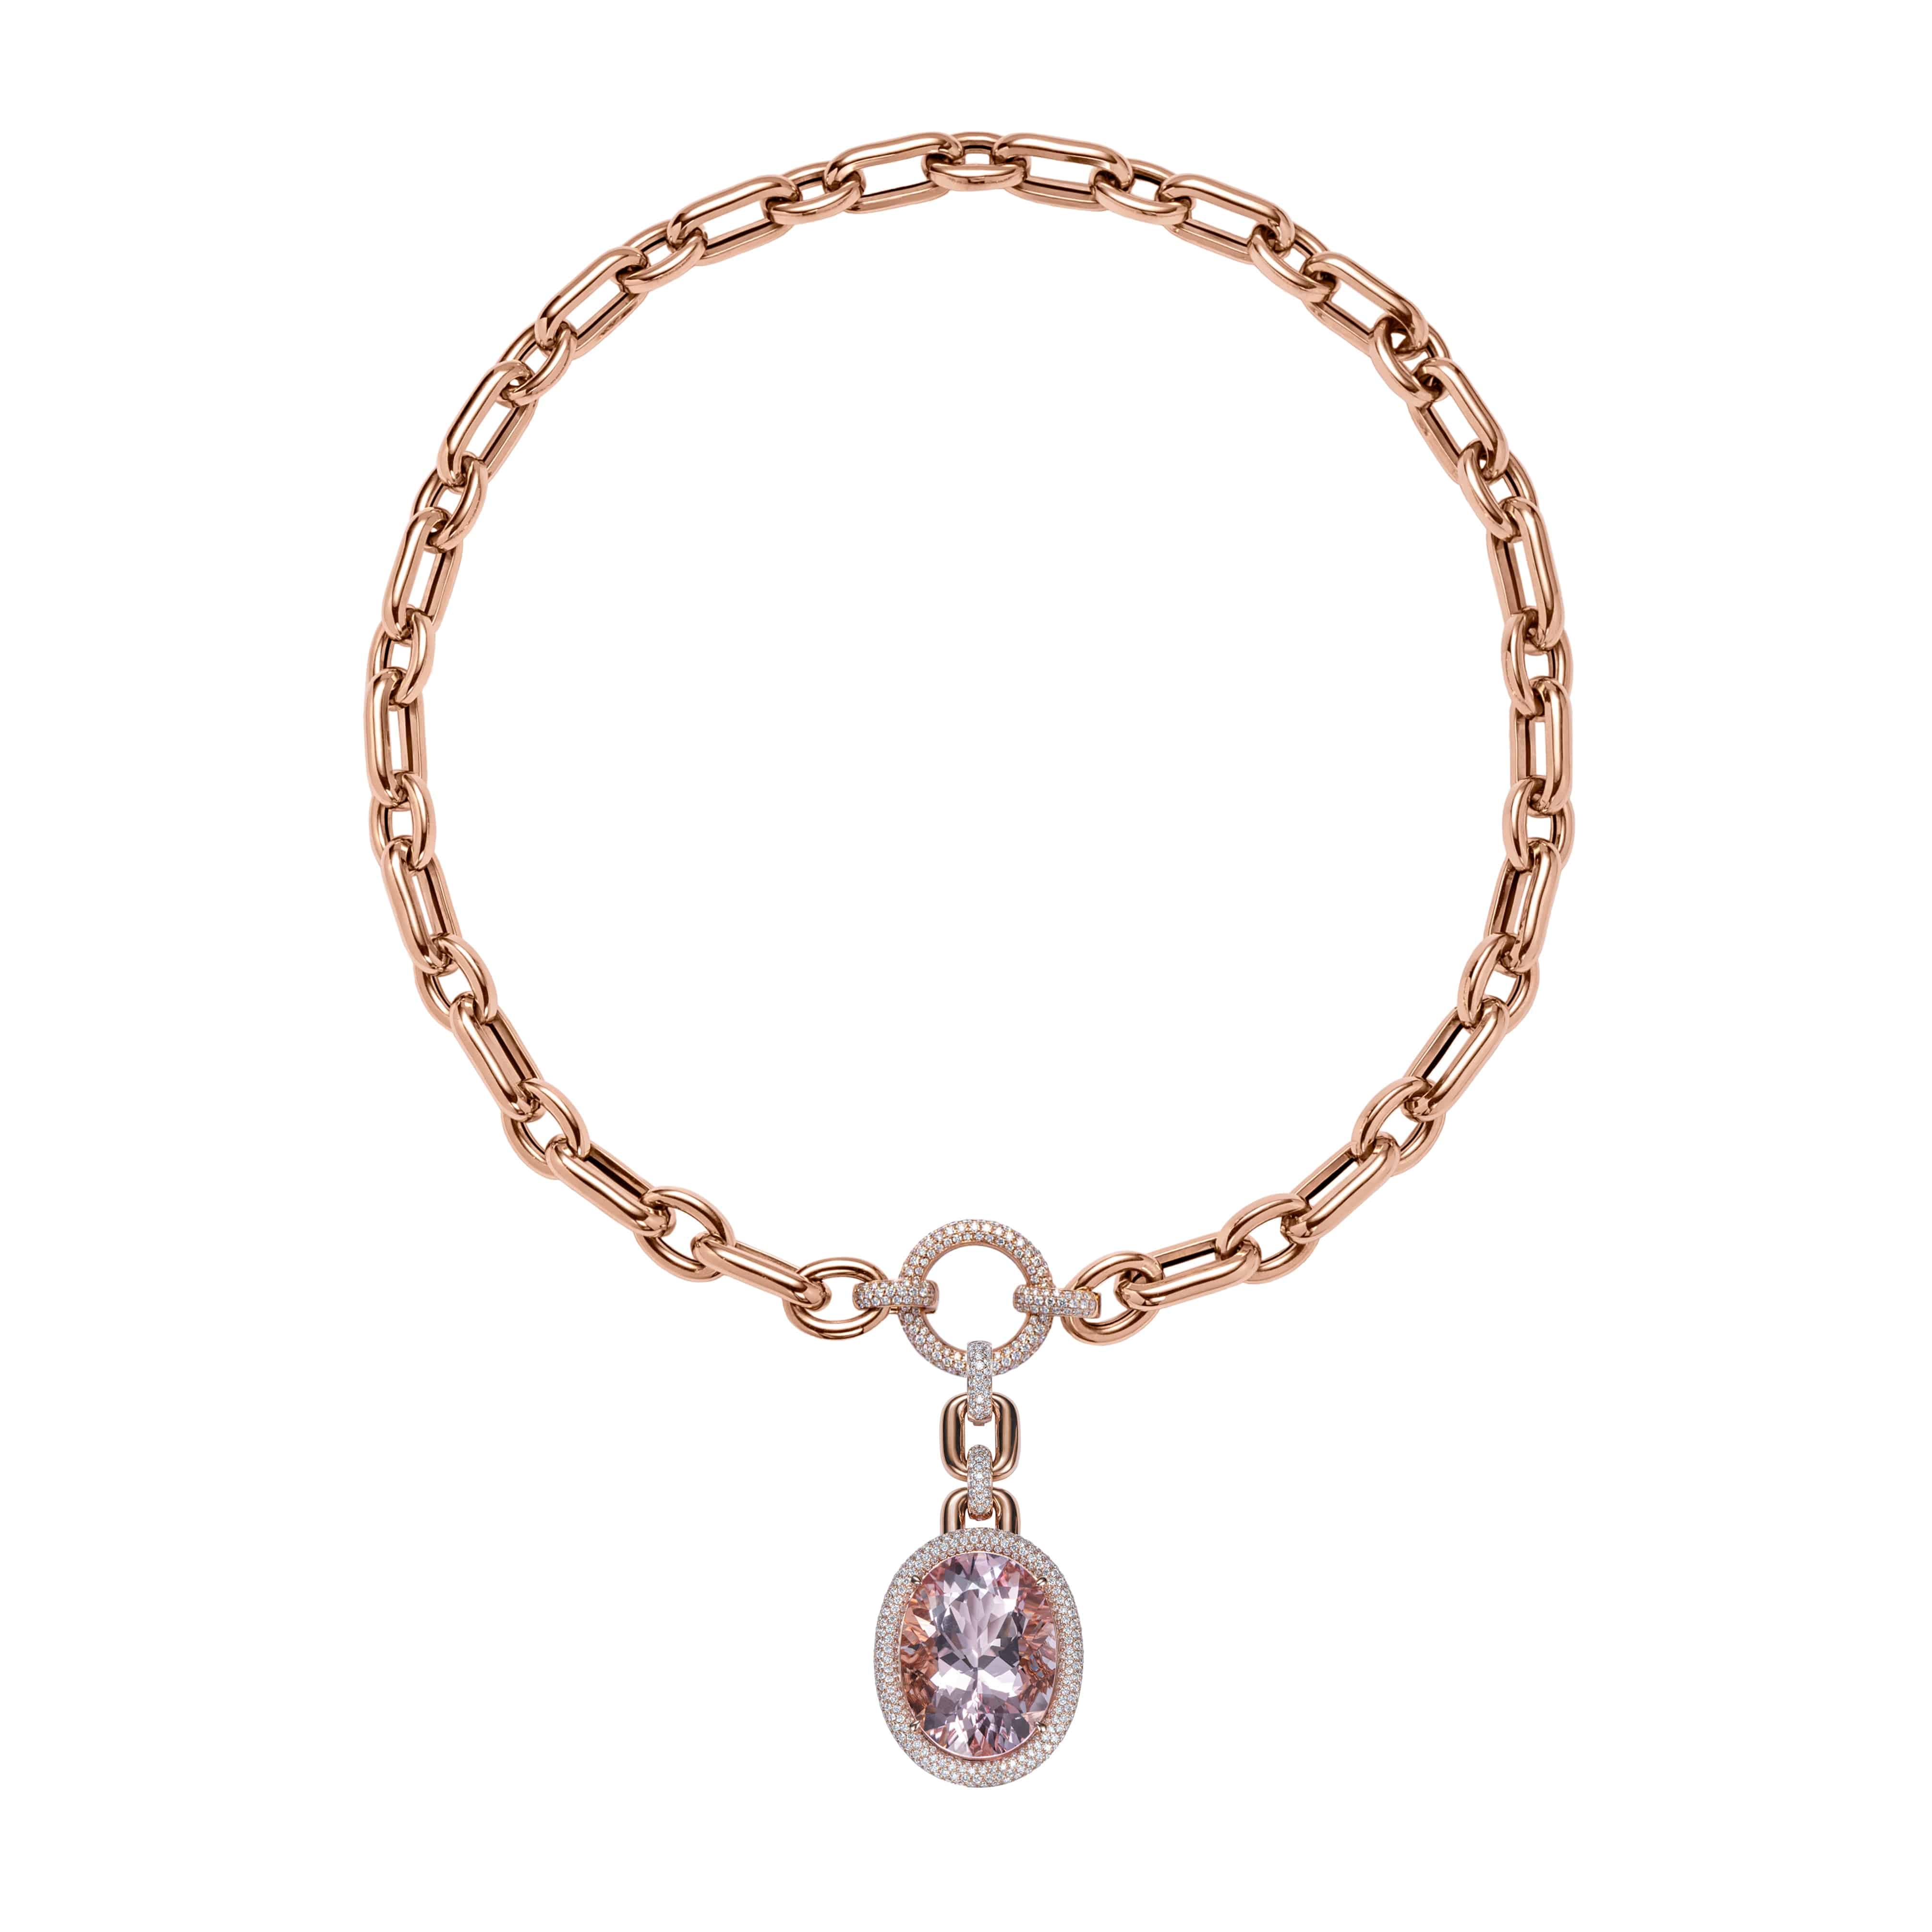 transformational-morganite-diamond-necklace-rno1161-43099758264484.jpg